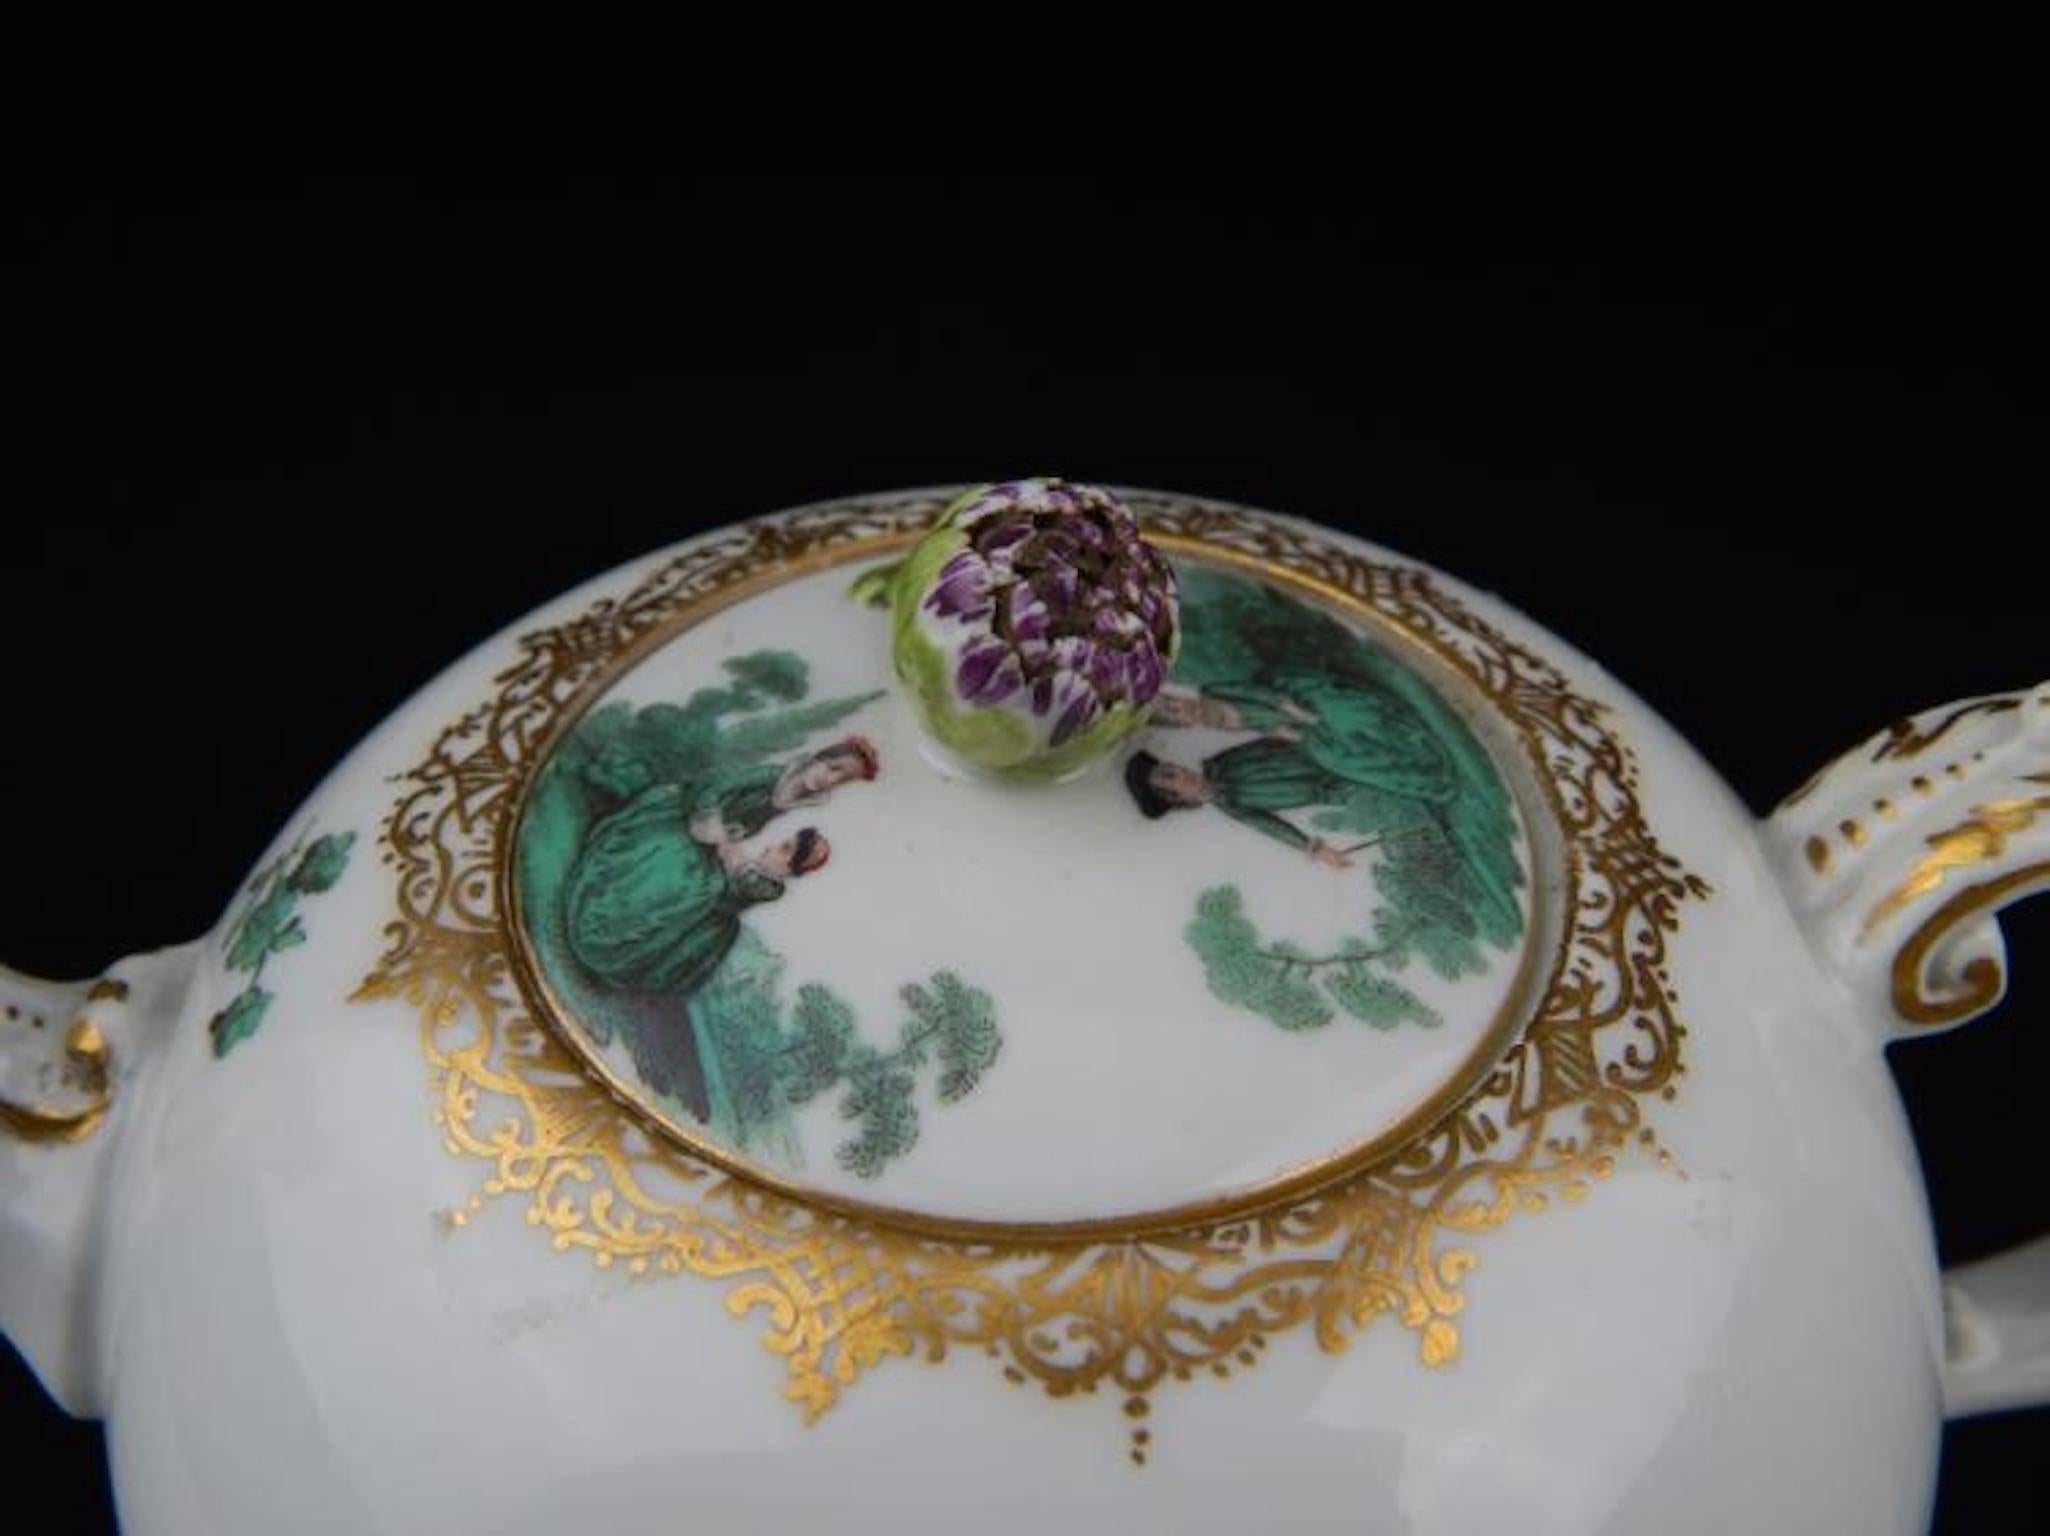 18th century meissen porcelain